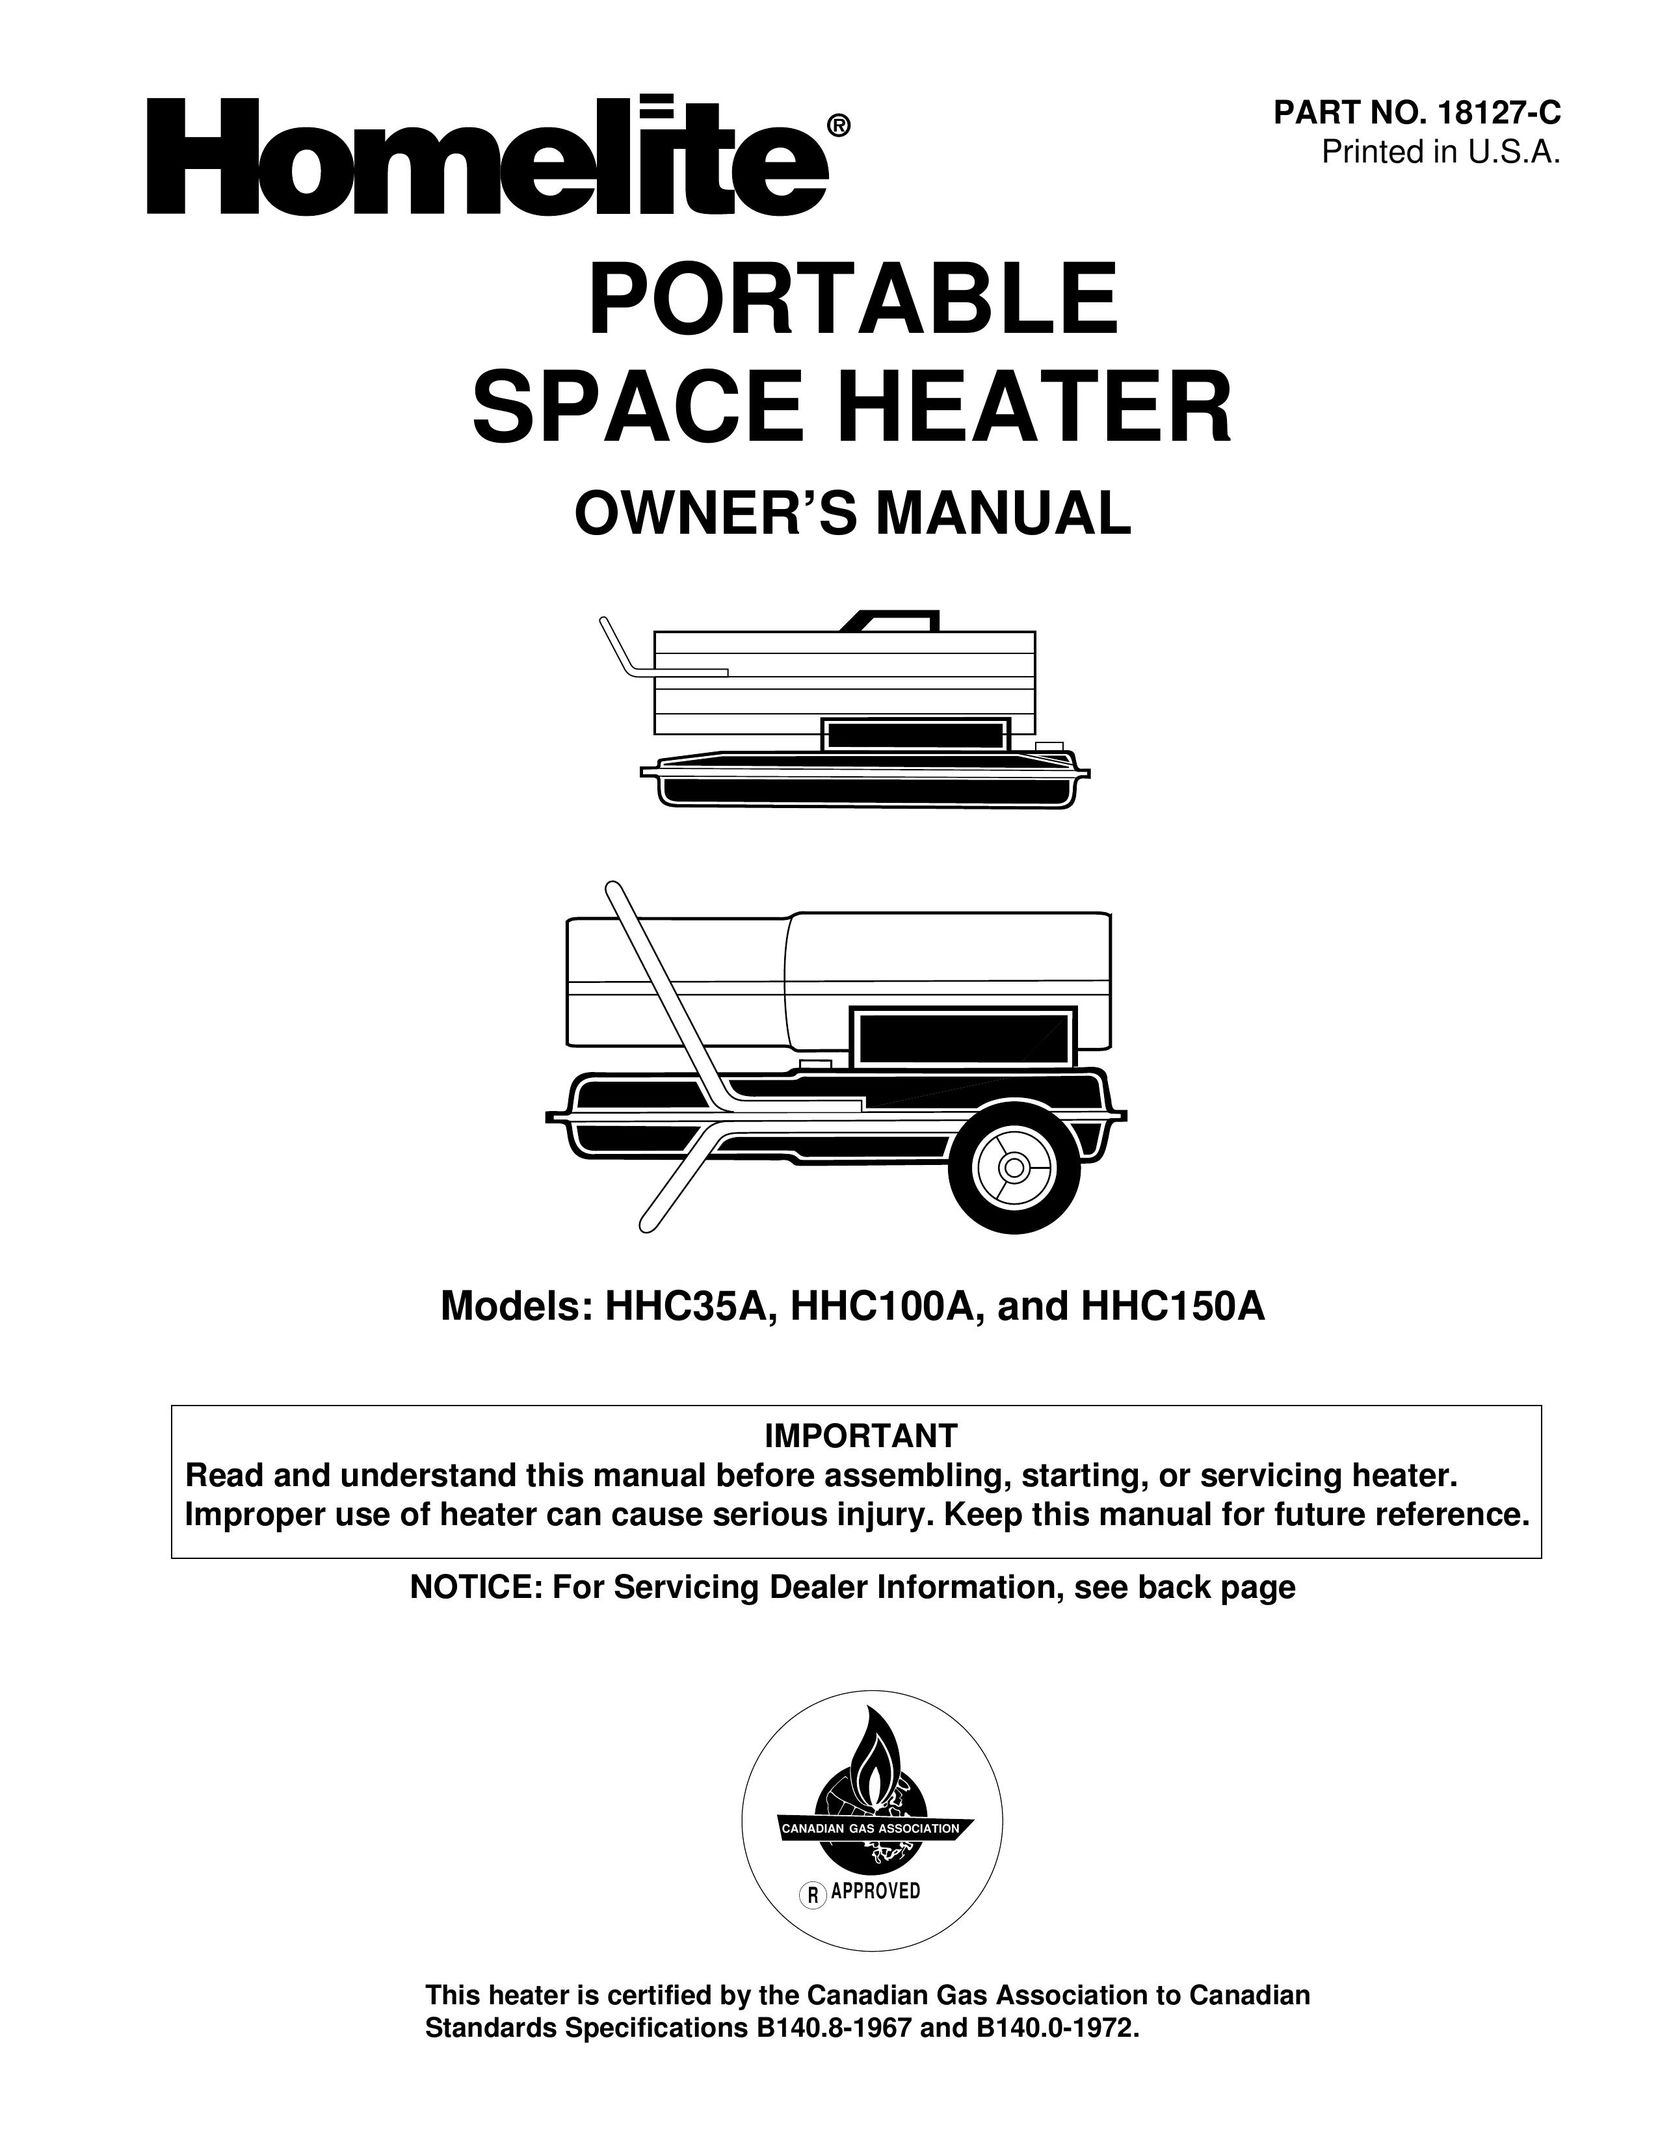 Homelite HHC150A Electric Heater User Manual